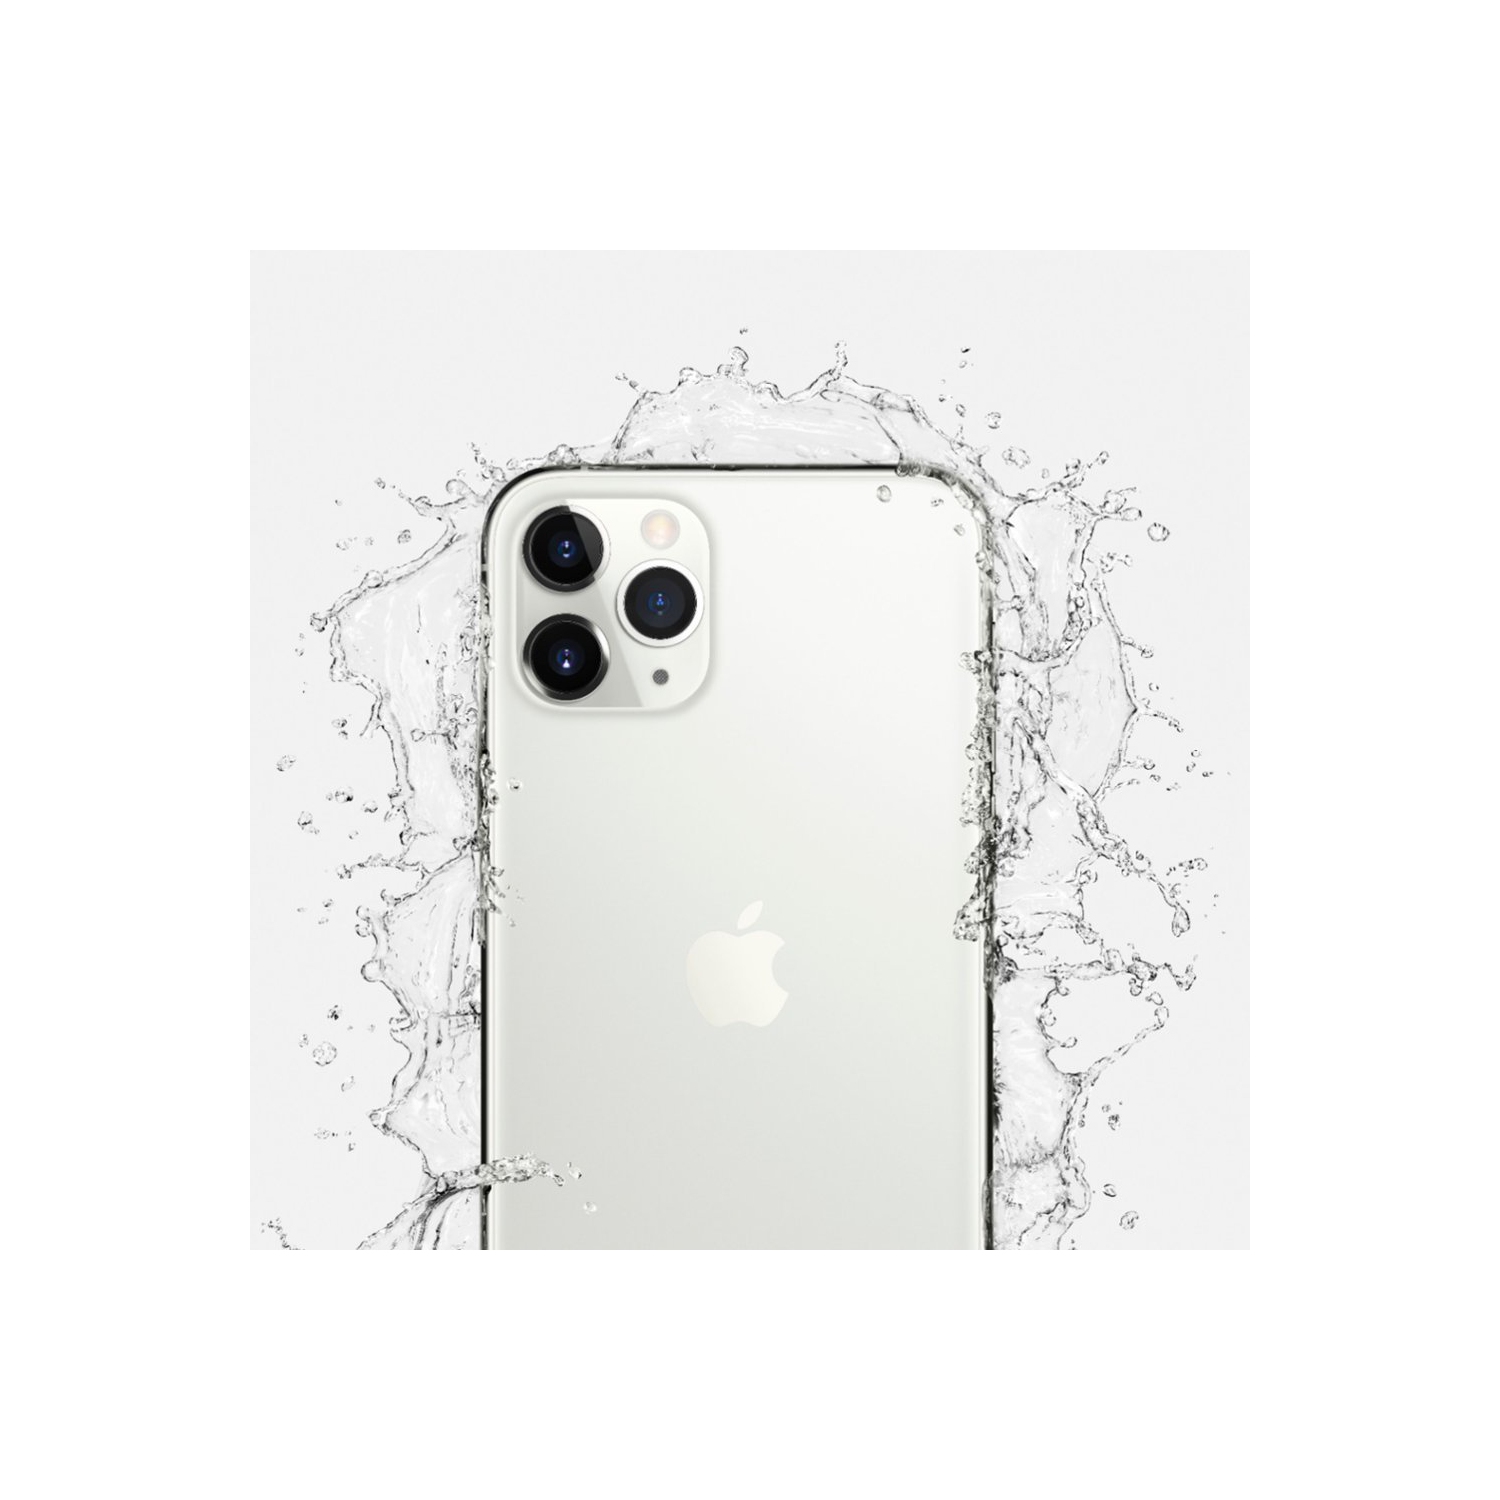 Apple iPhone 11 Pro Max 64GB Smartphone - Silver - Unlocked - Open Box |  Best Buy Canada